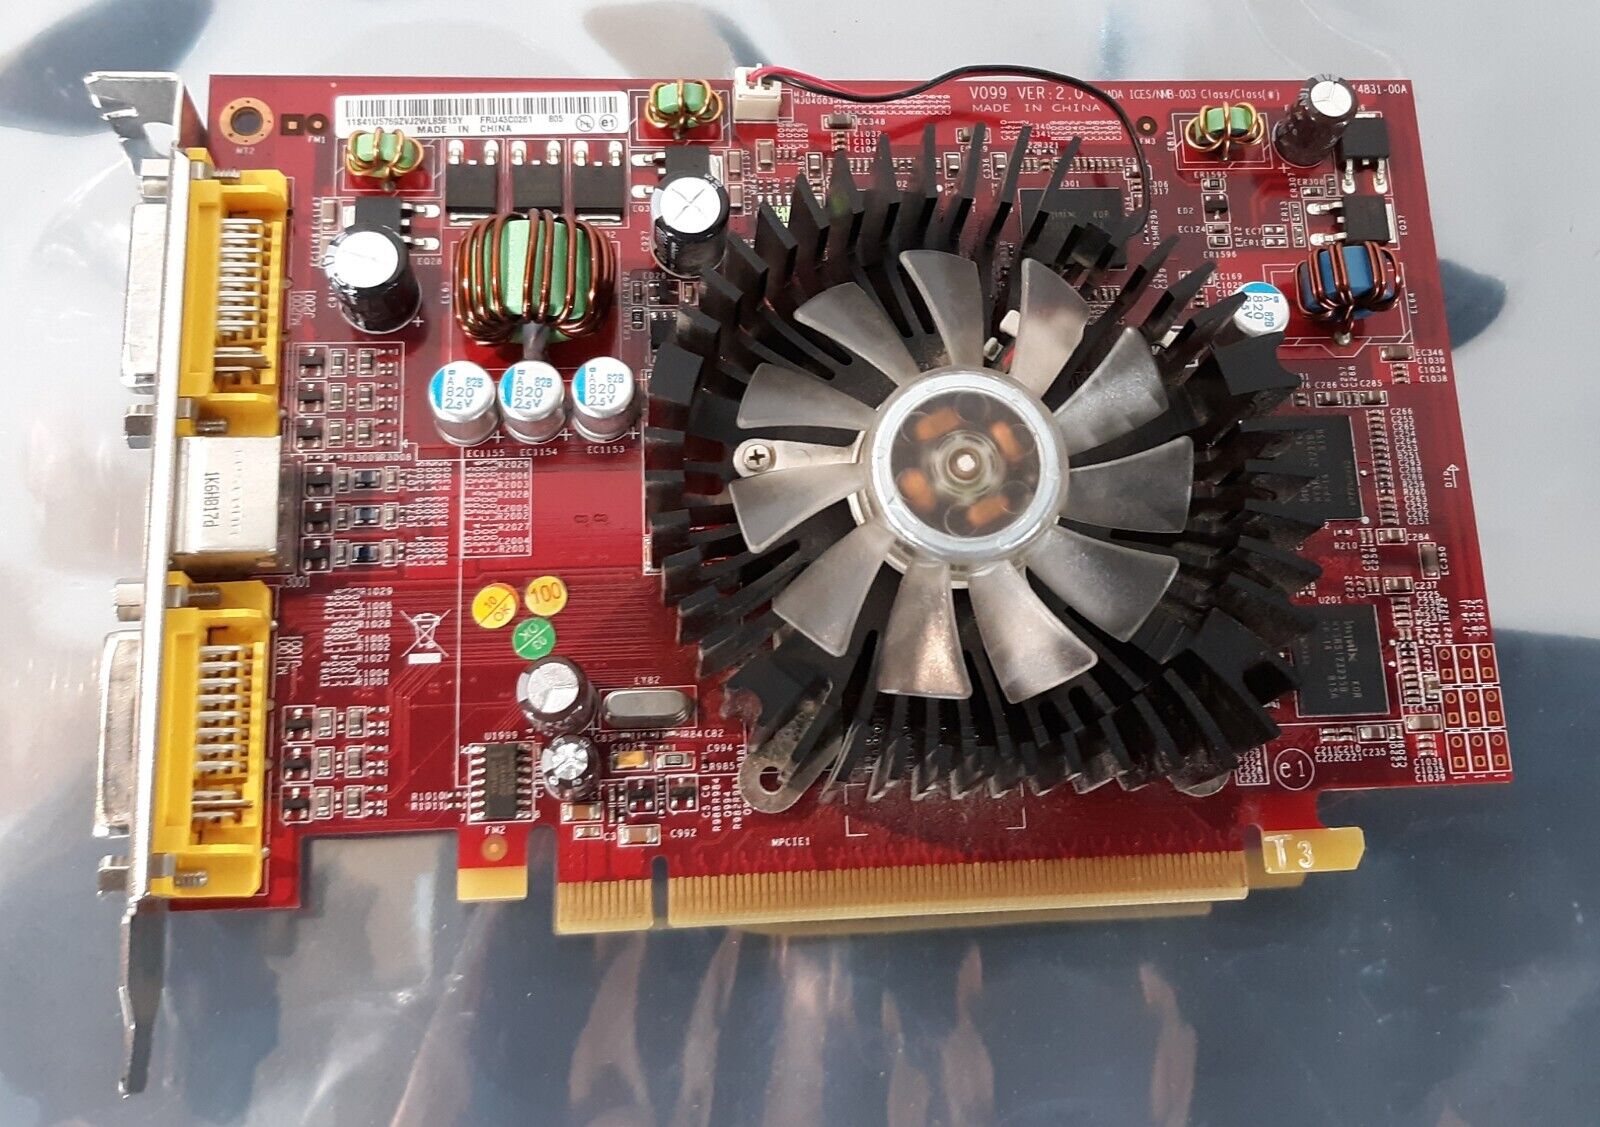 ATI Radeon 2600XT 109-814831-00A Dual DVI PCIe Video Card V099 Ver 2.0 *AS IS*